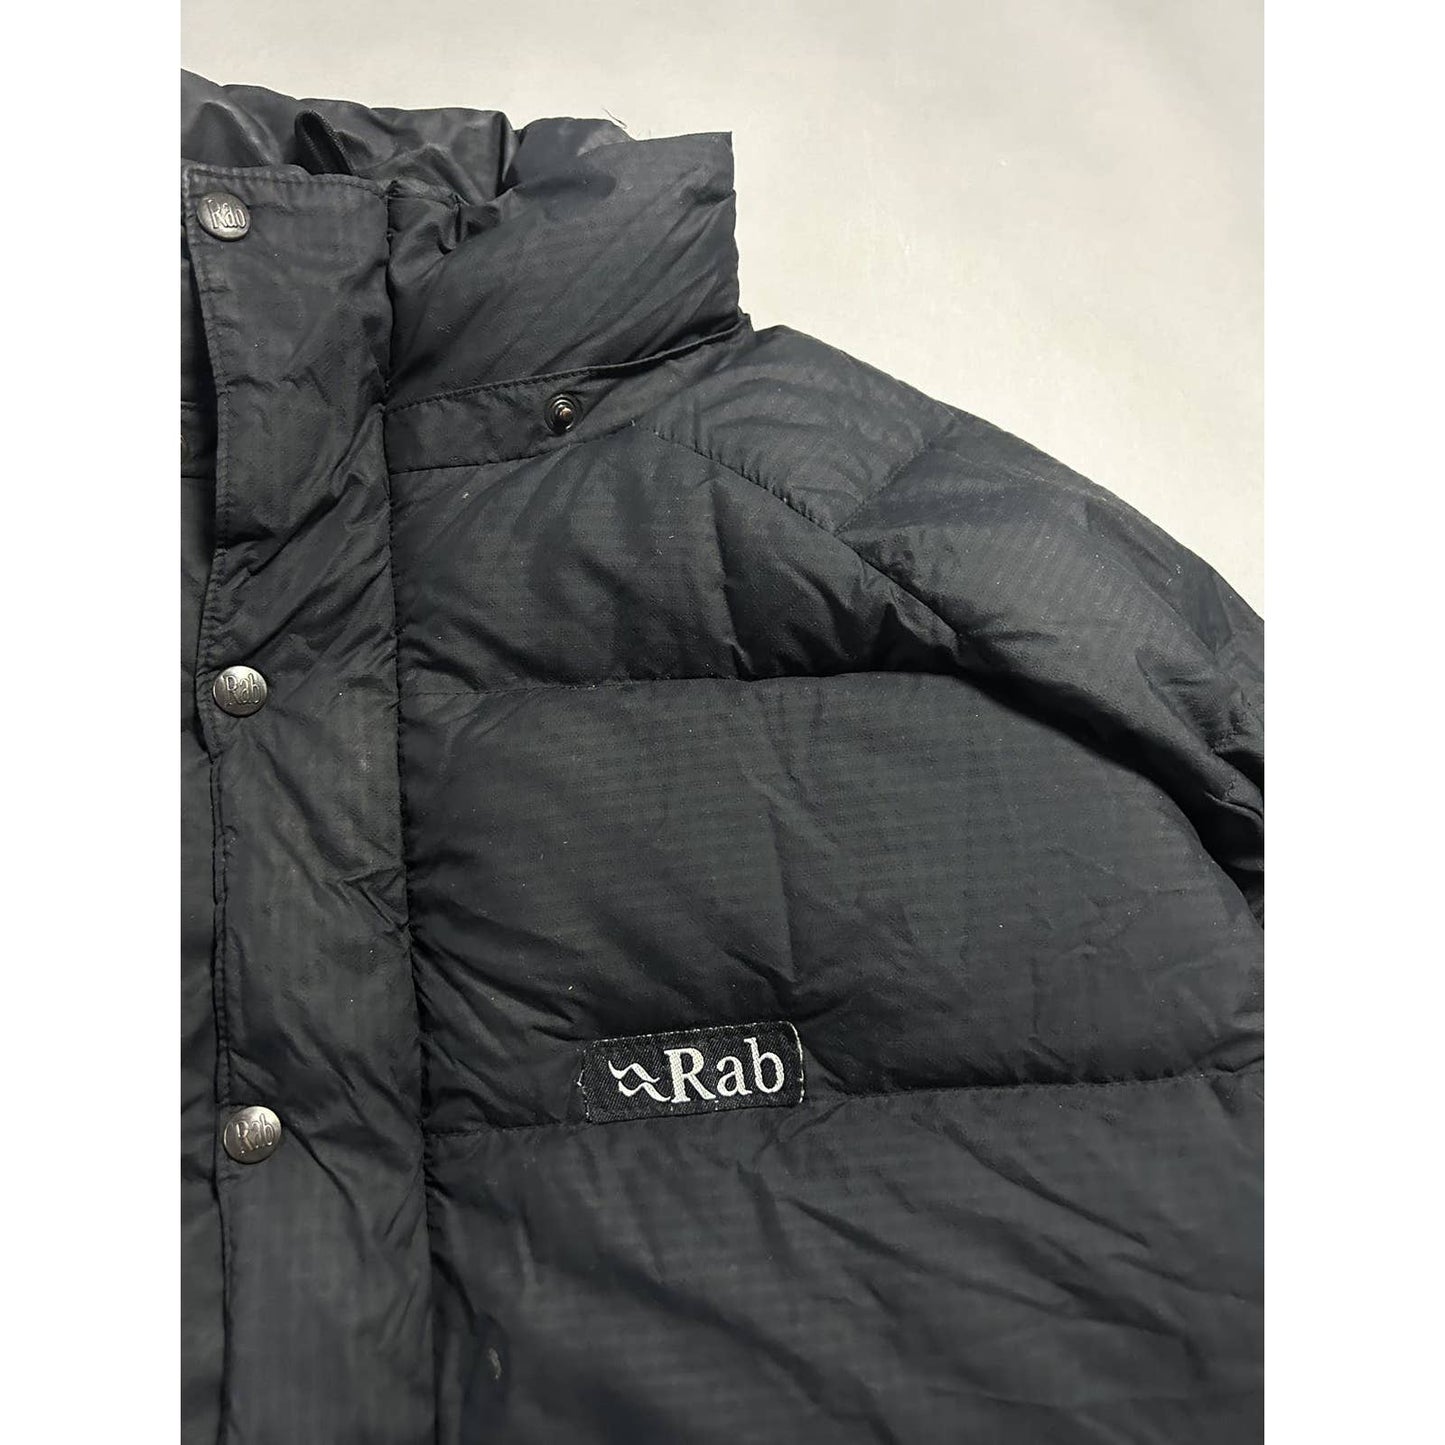 Rab puffer jacket vintage black pertex down